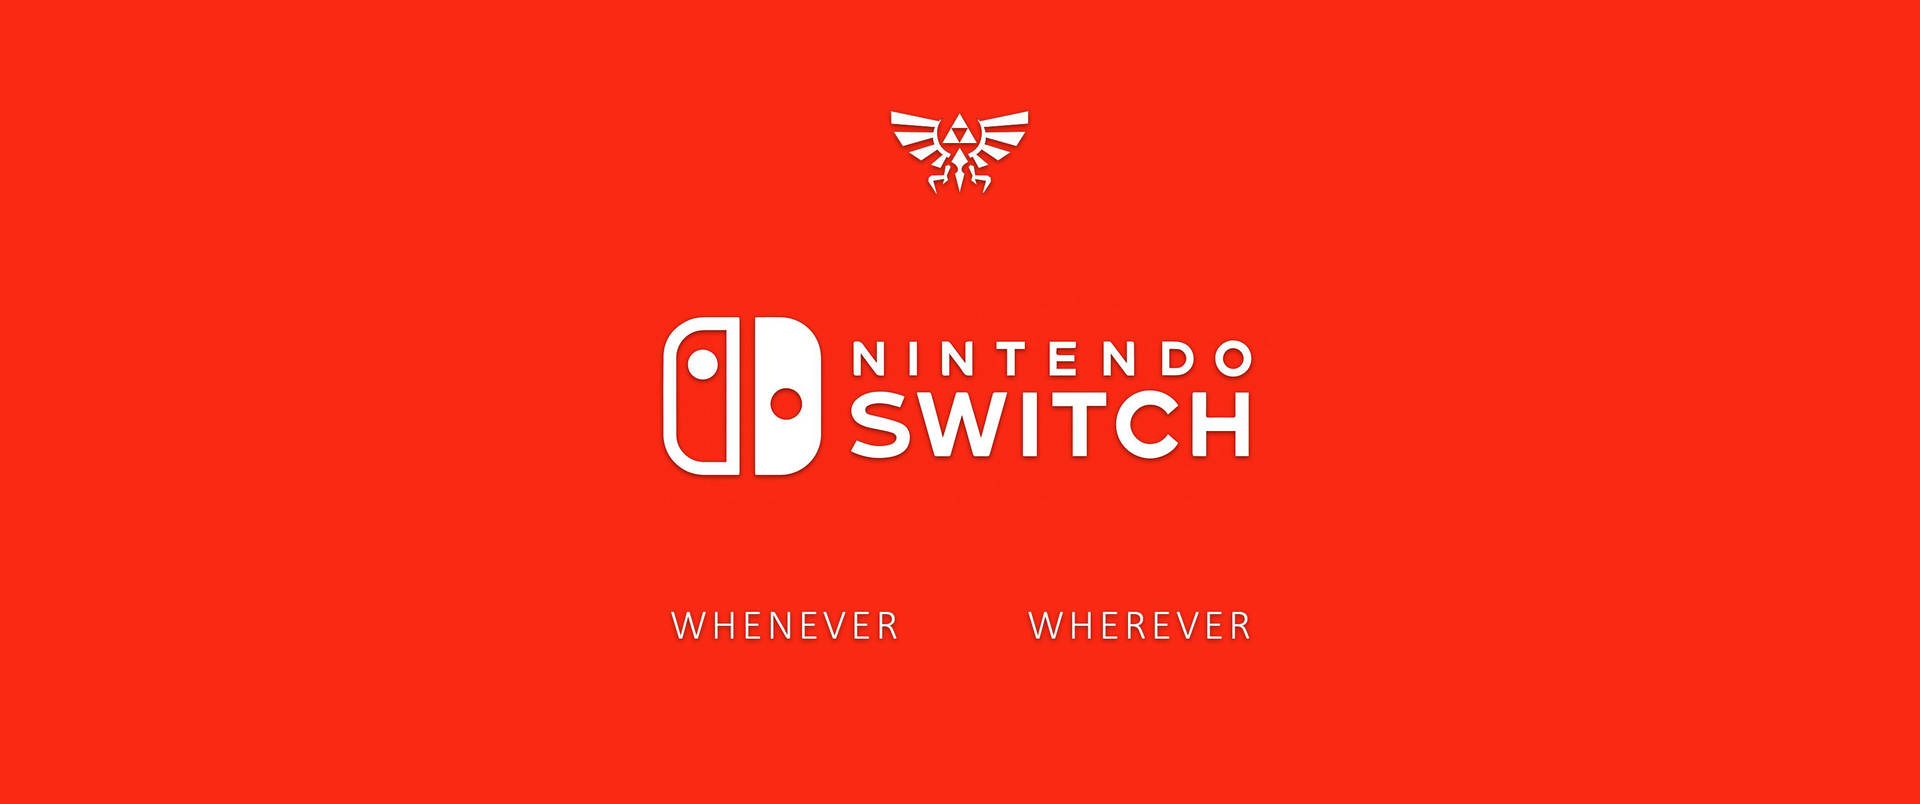 Nintendo Switch Whenever Wherever